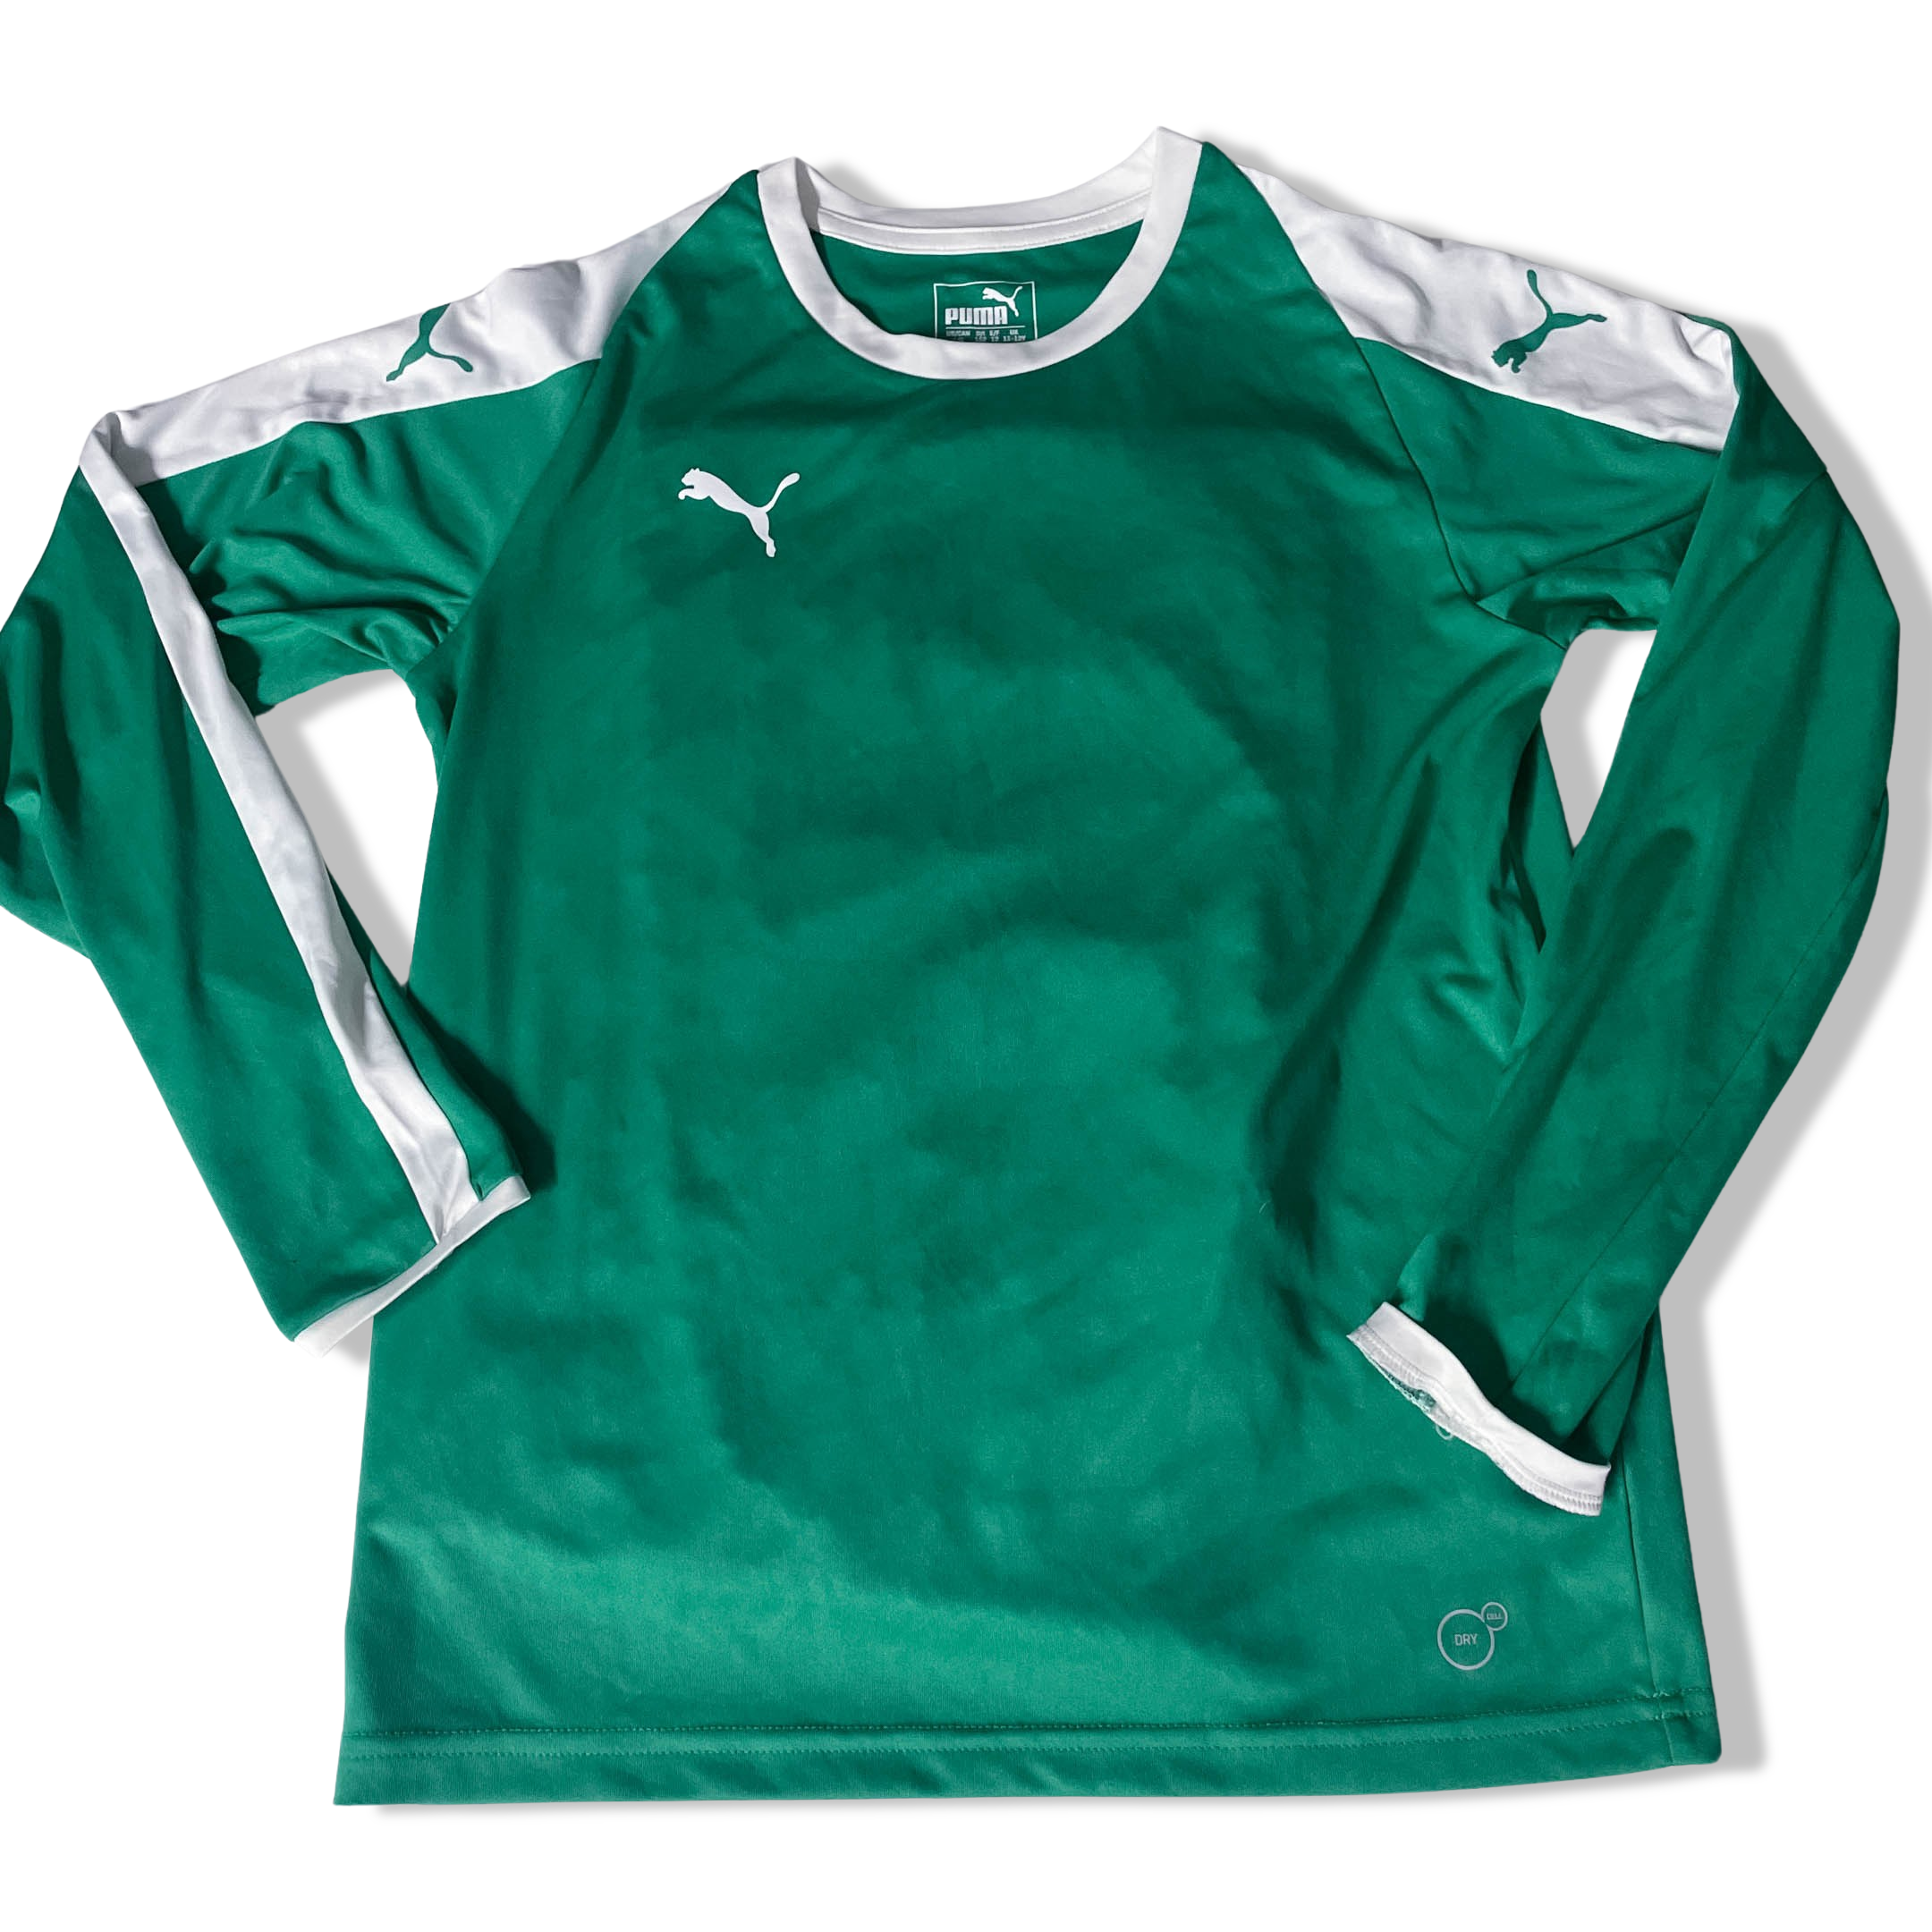 Vintage Long sleeve medium Puma jersey green